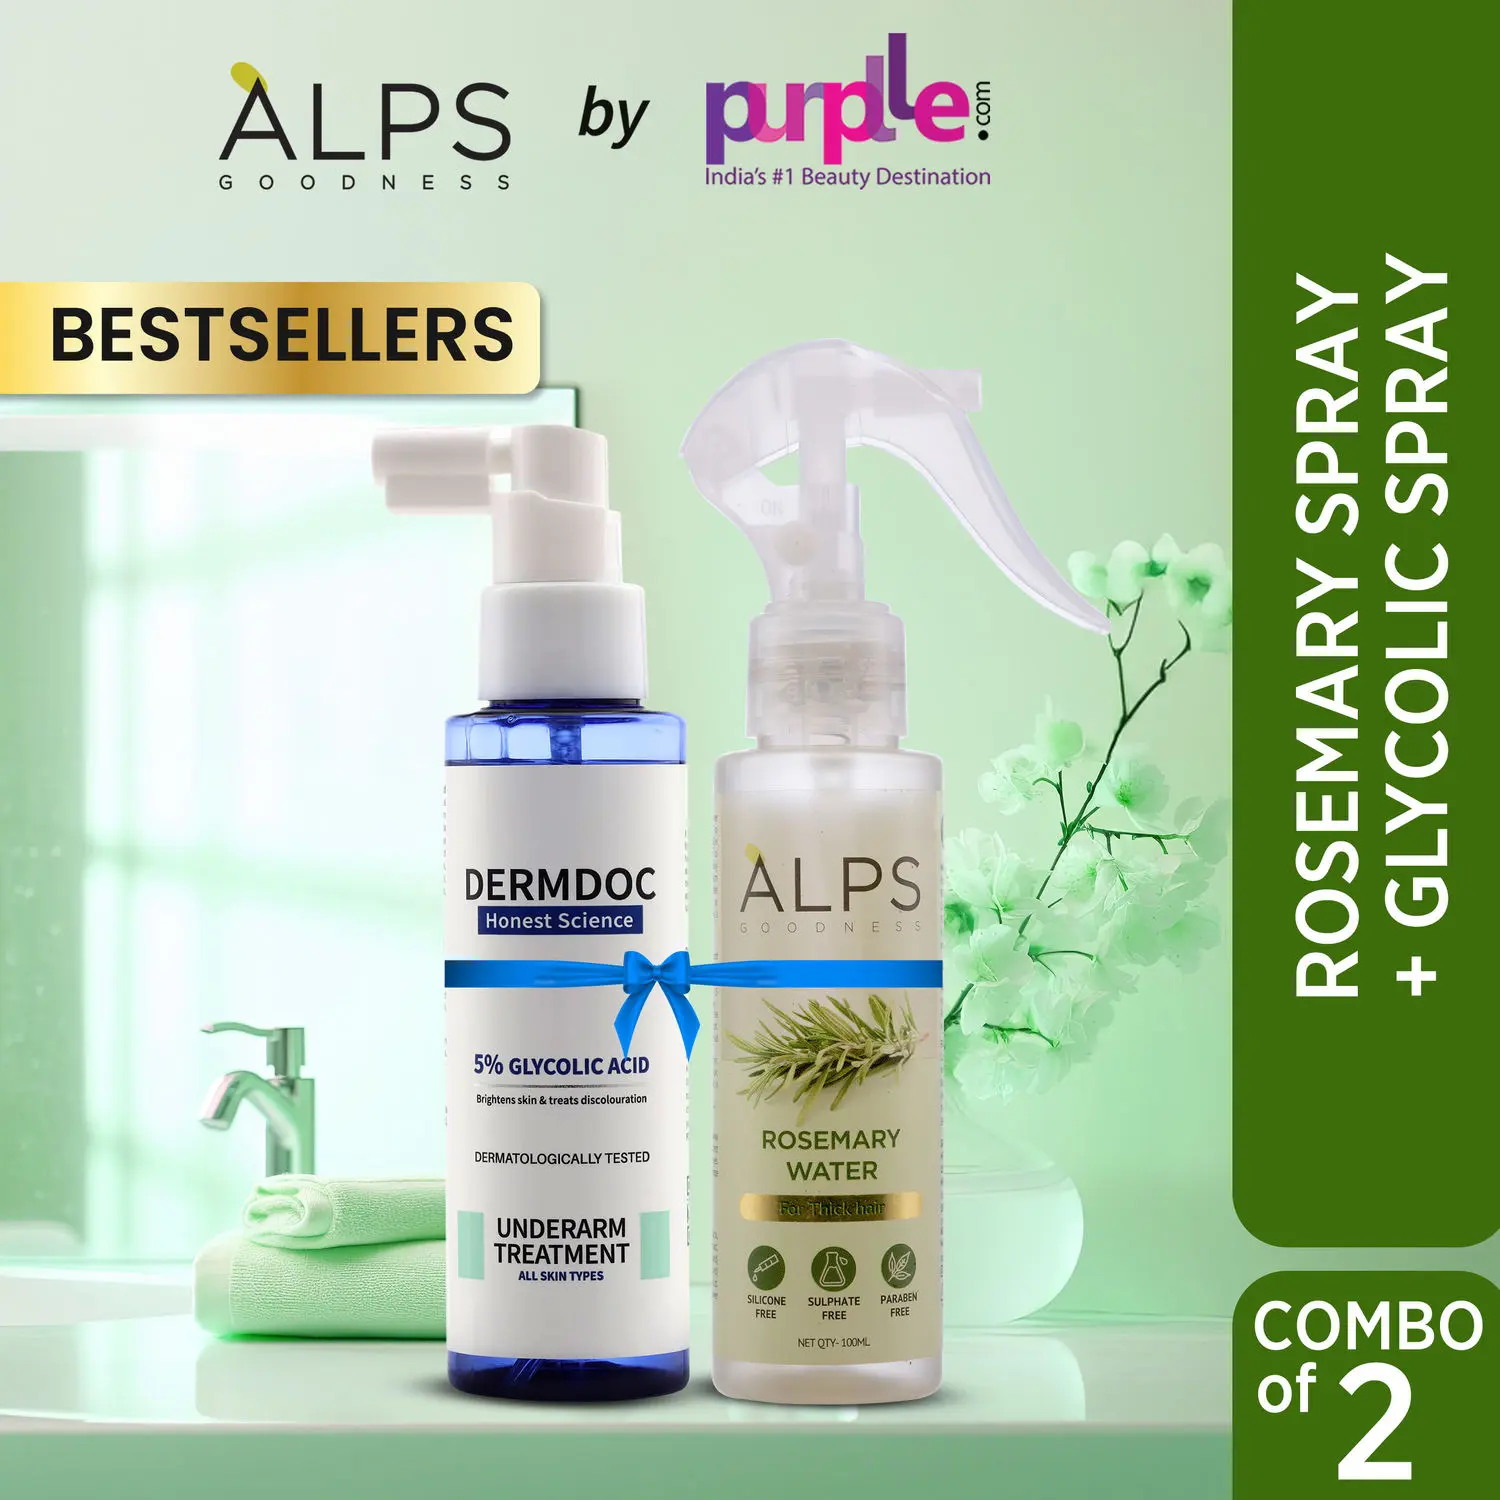 Alps Goodness X DERMDOC Bestselling Sprays Duo I Rosemary Water Spray + Glycolic Acid Underarm Spray I Hair Growth Expert I Underarm Brightening